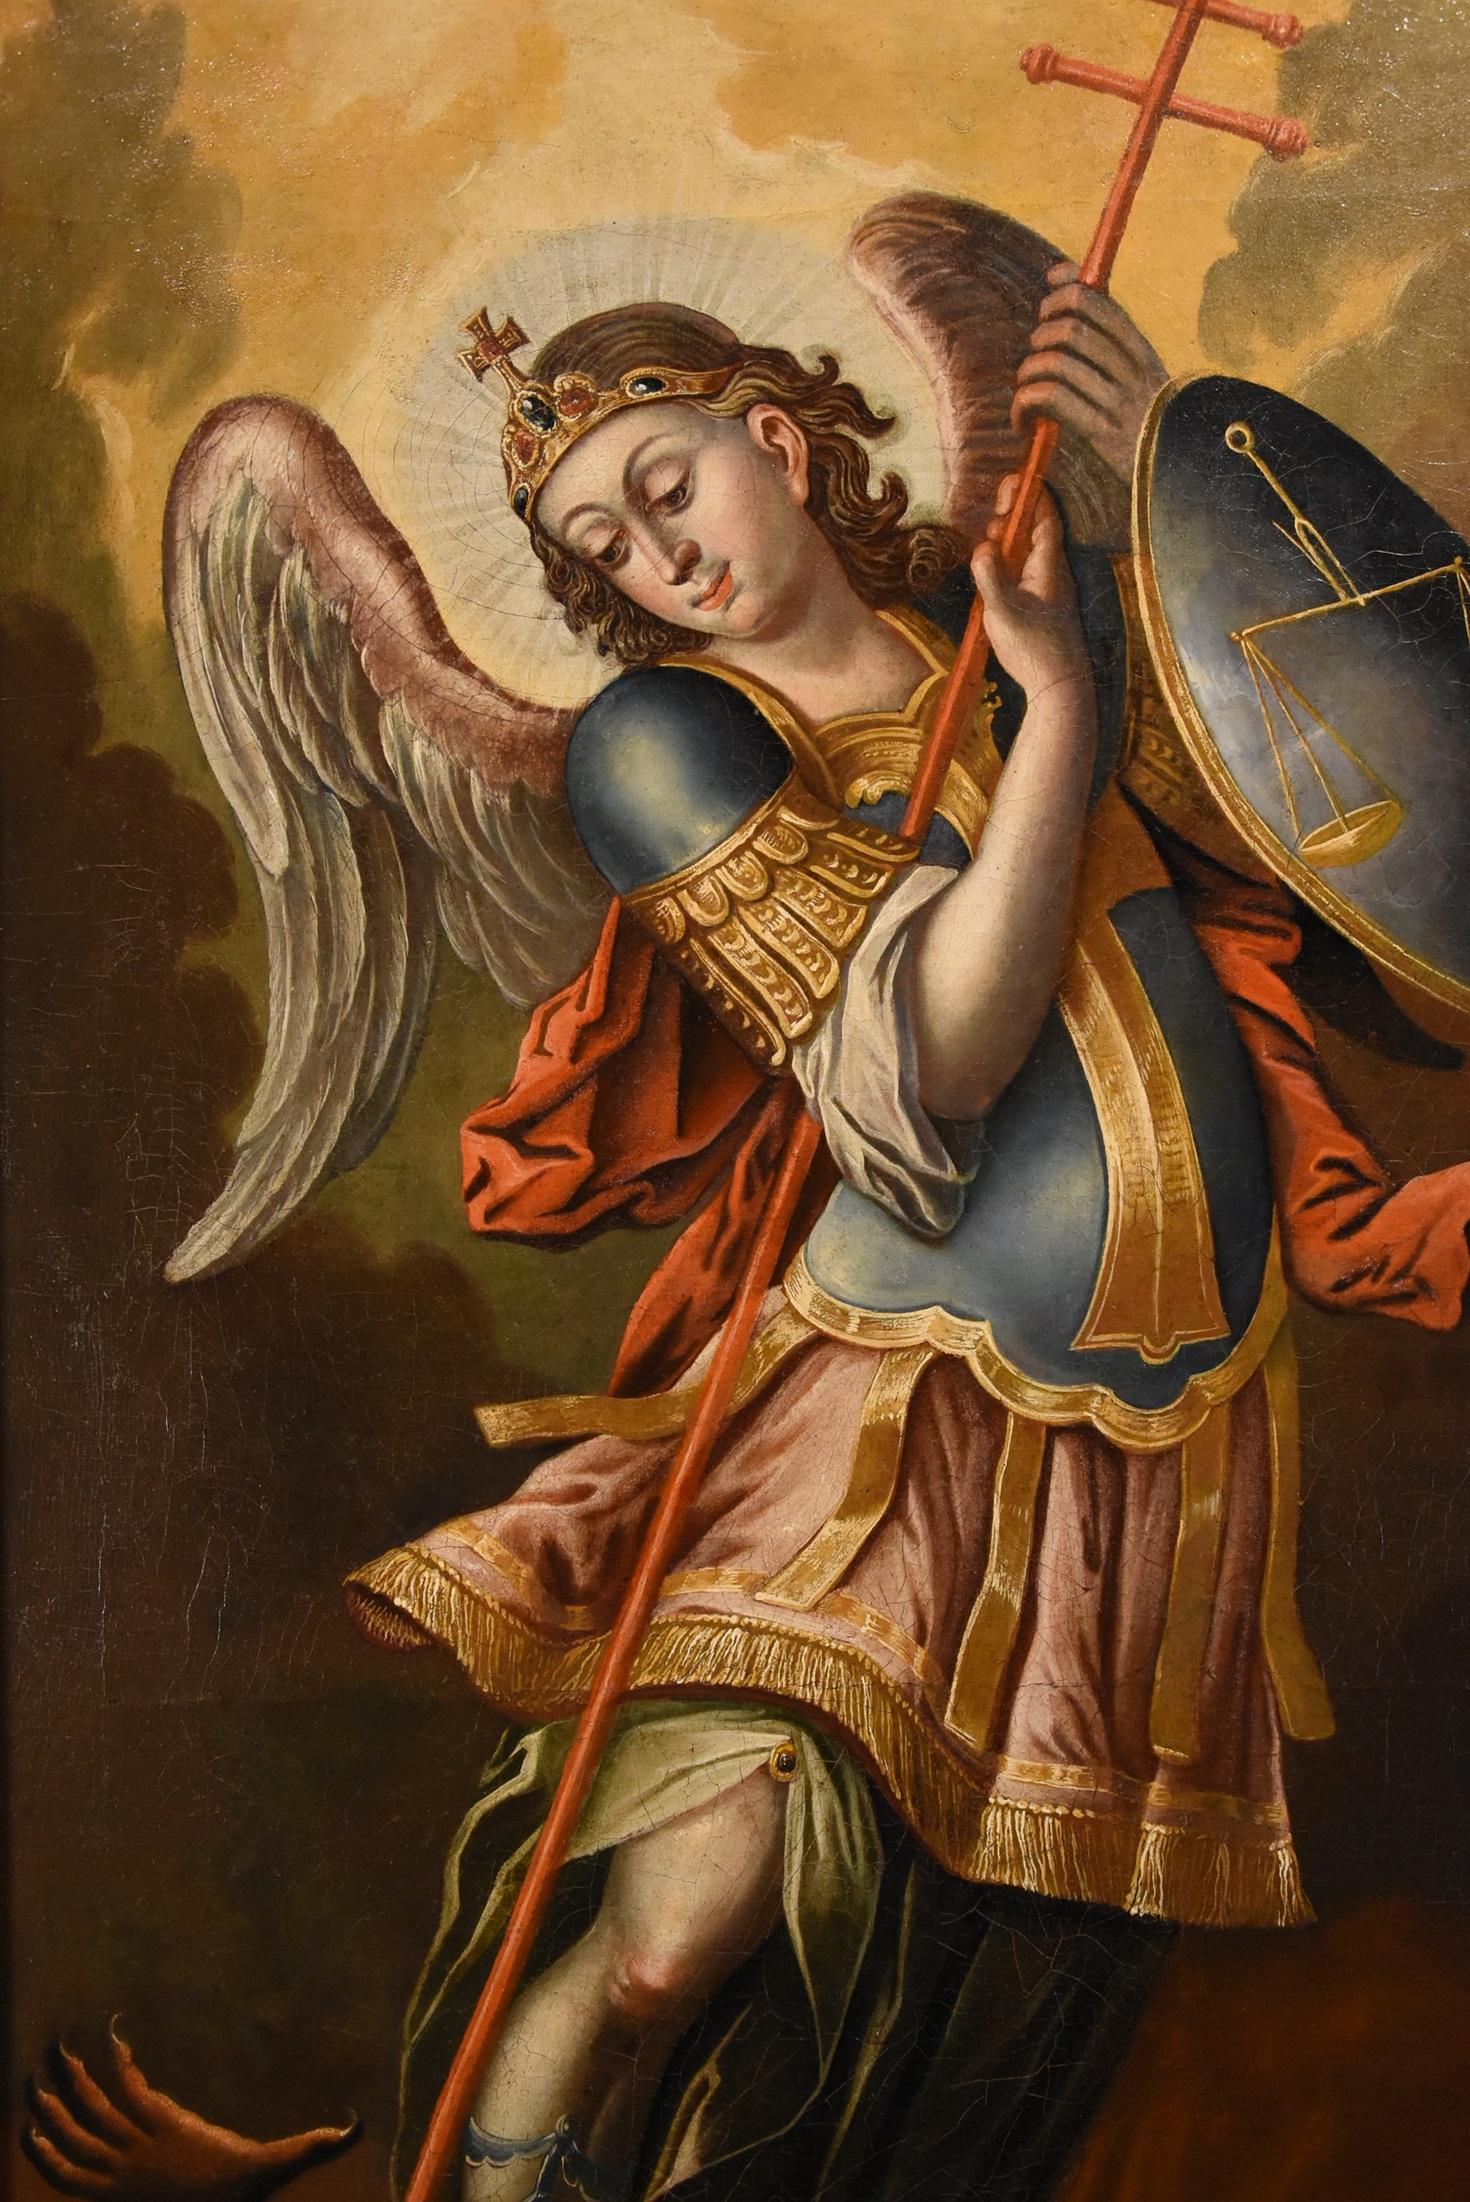 Saint Michael Archangel Spanish School 17th Century Paint Oil on vanvas Spain - Old Masters Painting by Spanish school of the mid-17th century